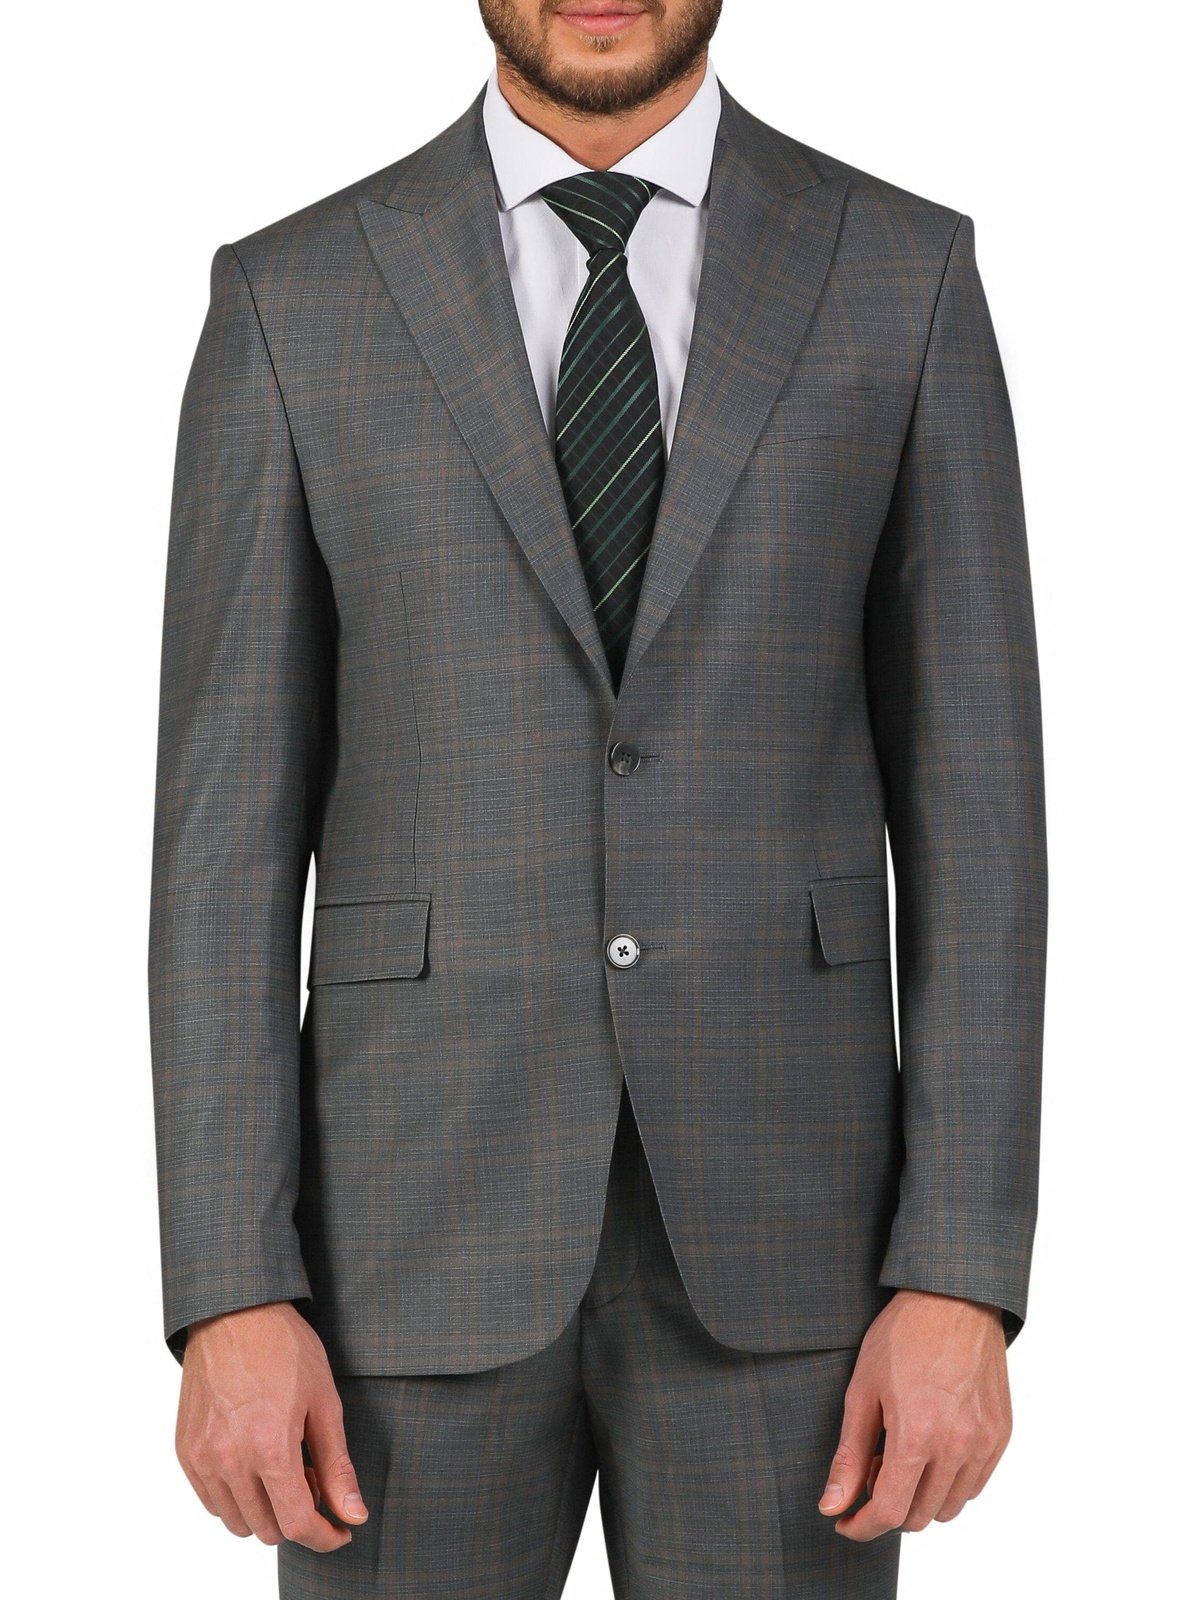 Di'nucci SUITS Di'nucci Light Gray With Brown Windowpane Peak Lapel Wool Suit